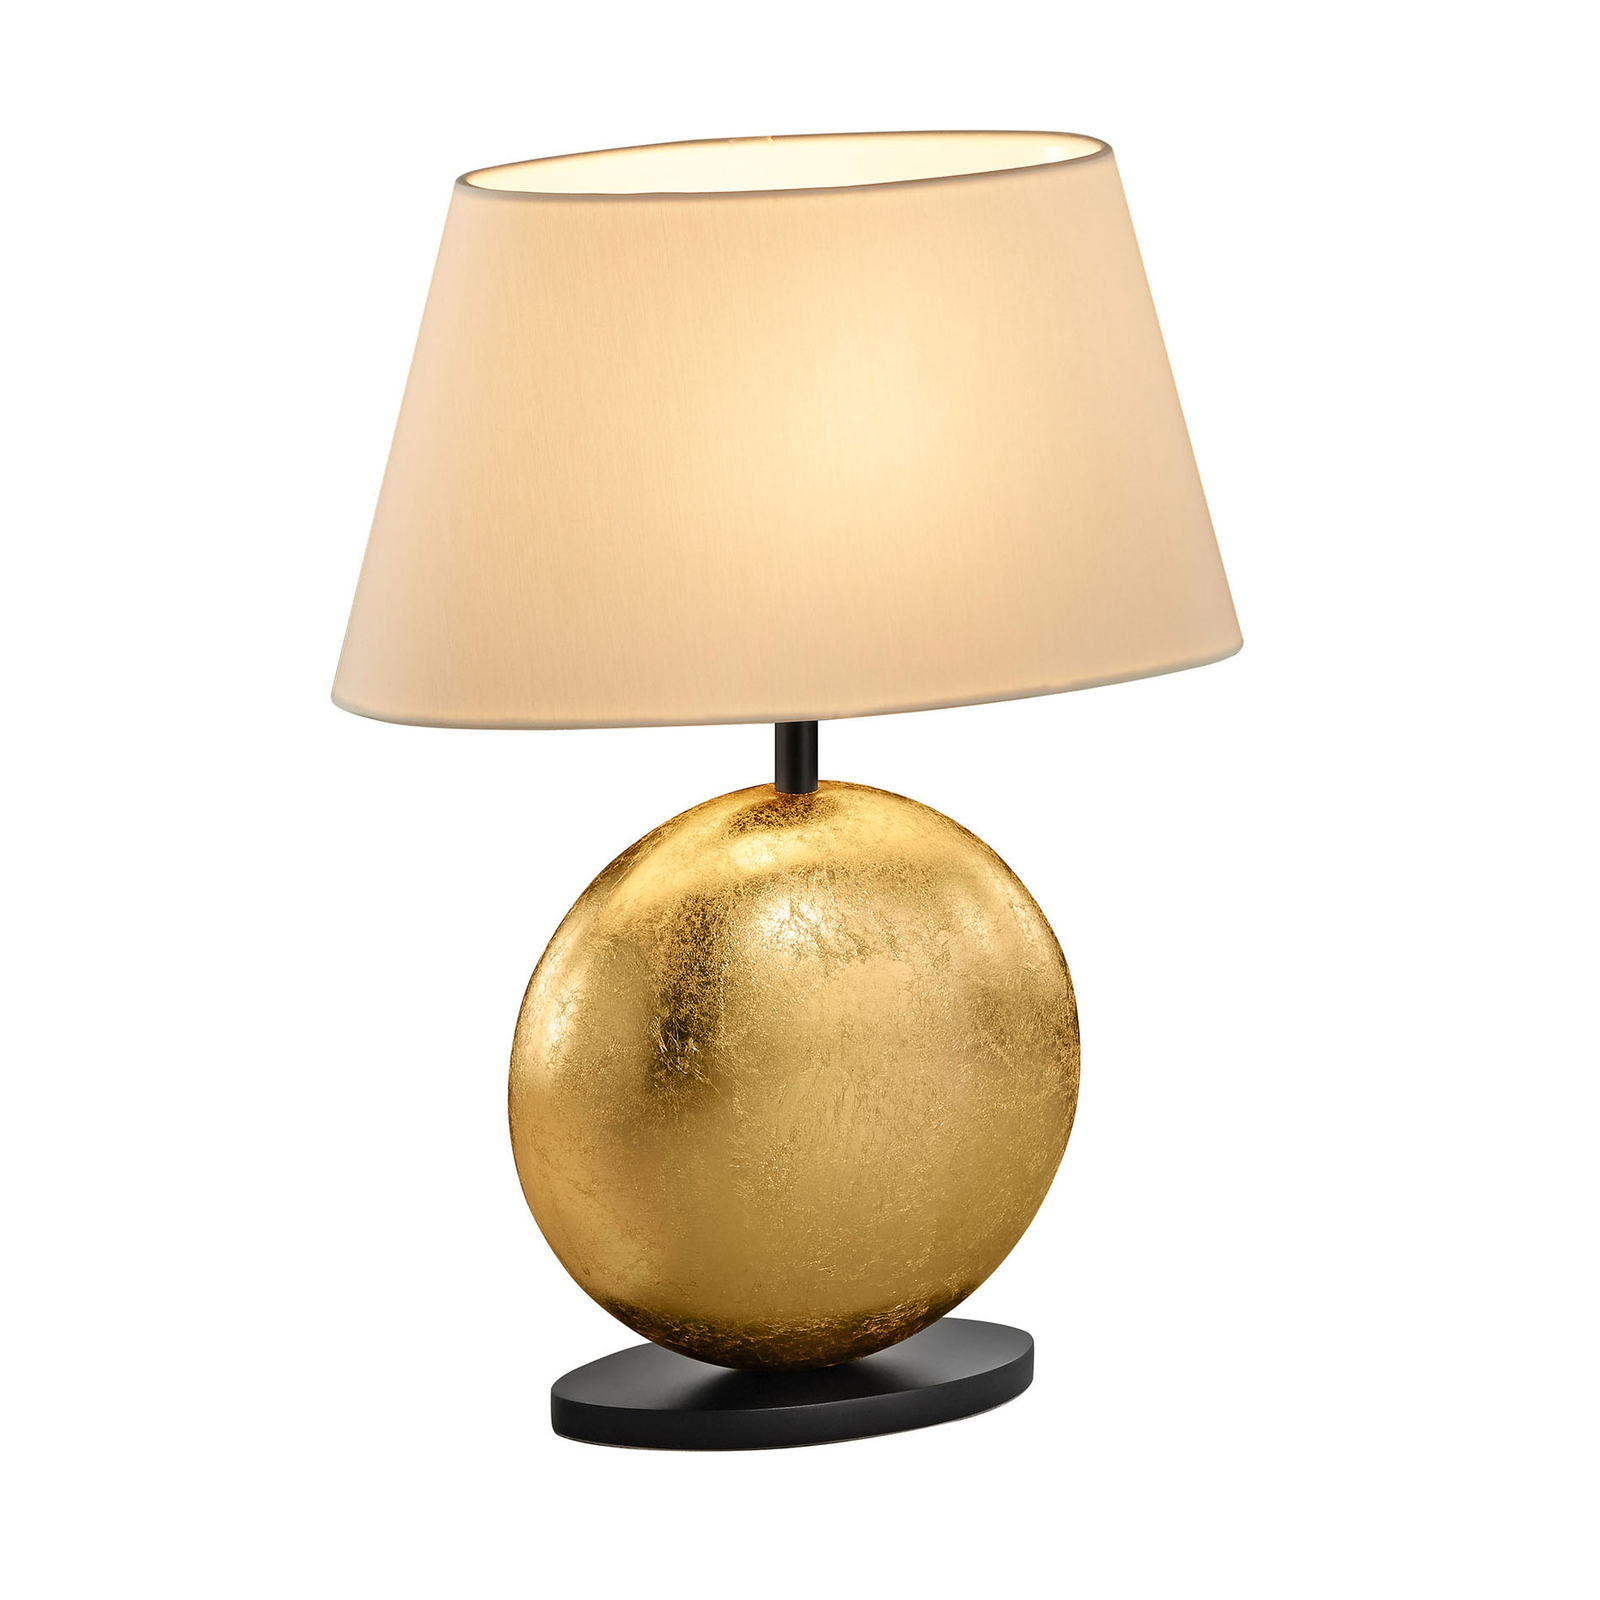 BANKAMP Mali tafellamp, crème/goud, hoogte 41cm